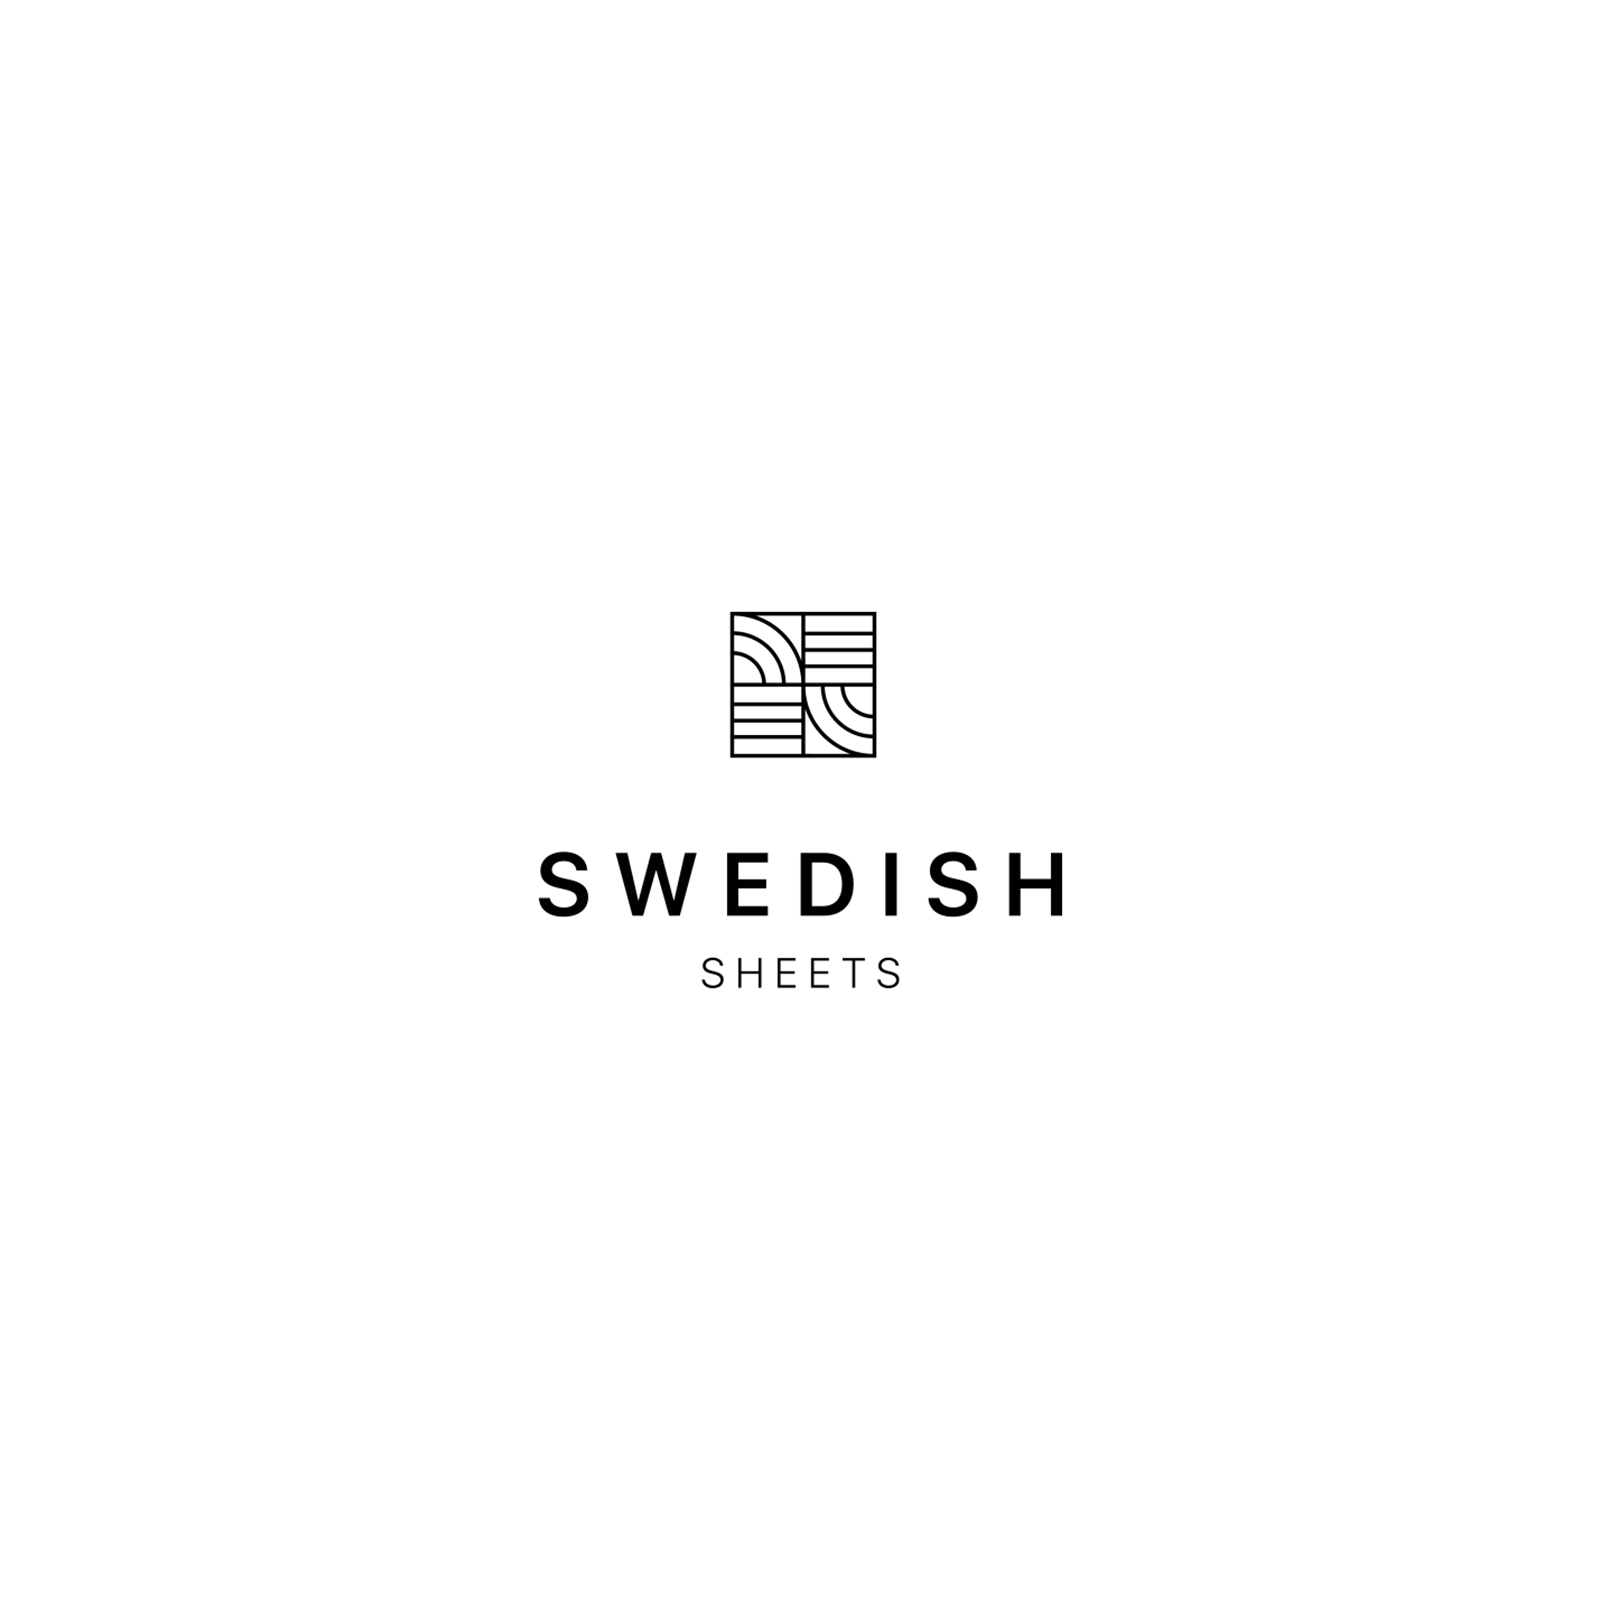 Sweedish Logo - Image result for swedish logo design. Branding, Logos, and Signs